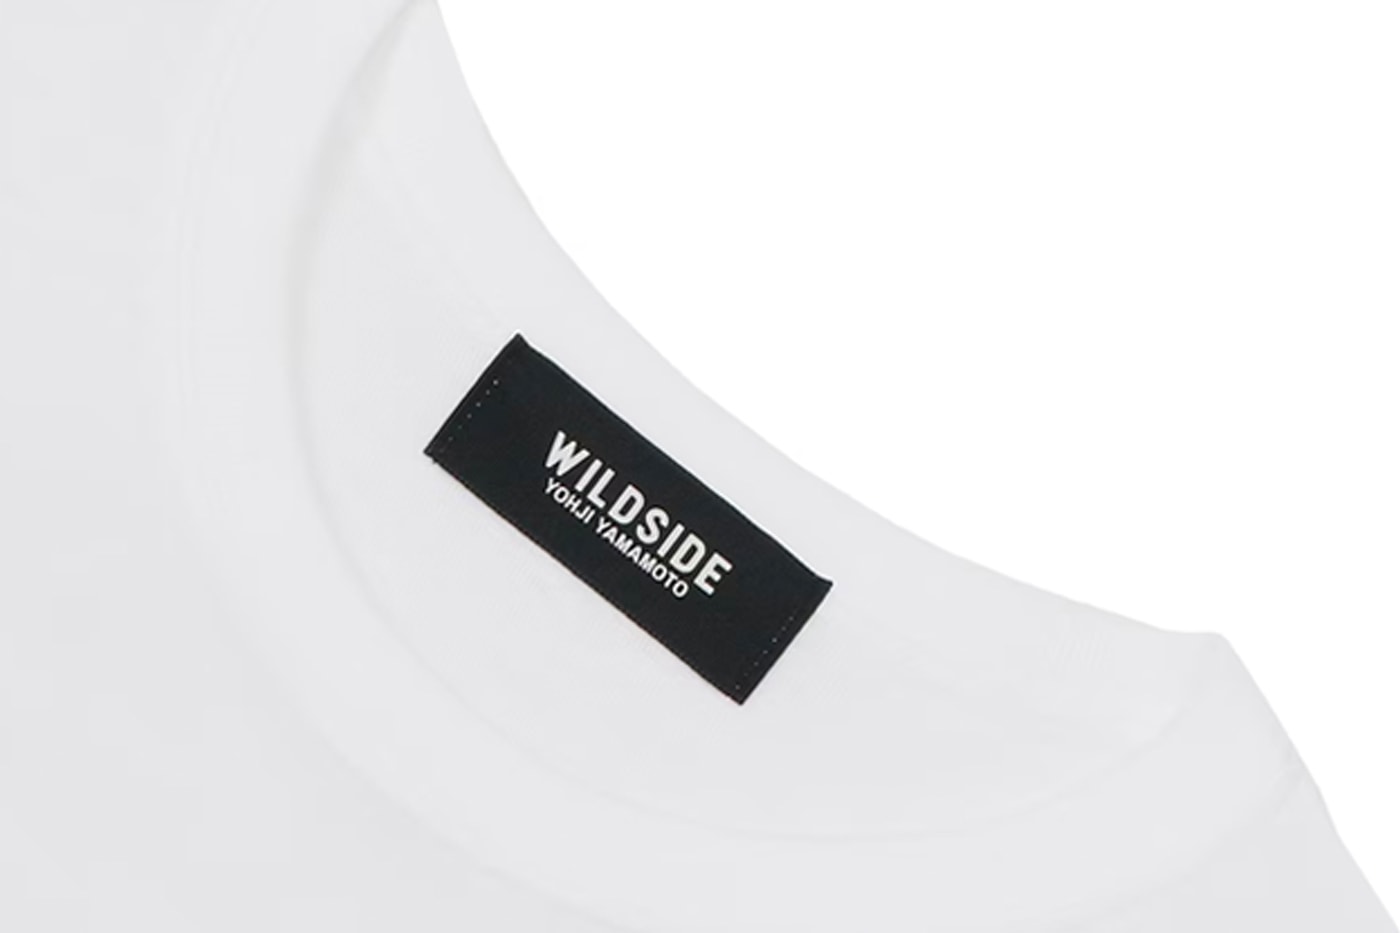 WILDSIDE Yohji Yamamoto M/M (PARIS) Atsushi Okubo T-Shirt Collaboration Info